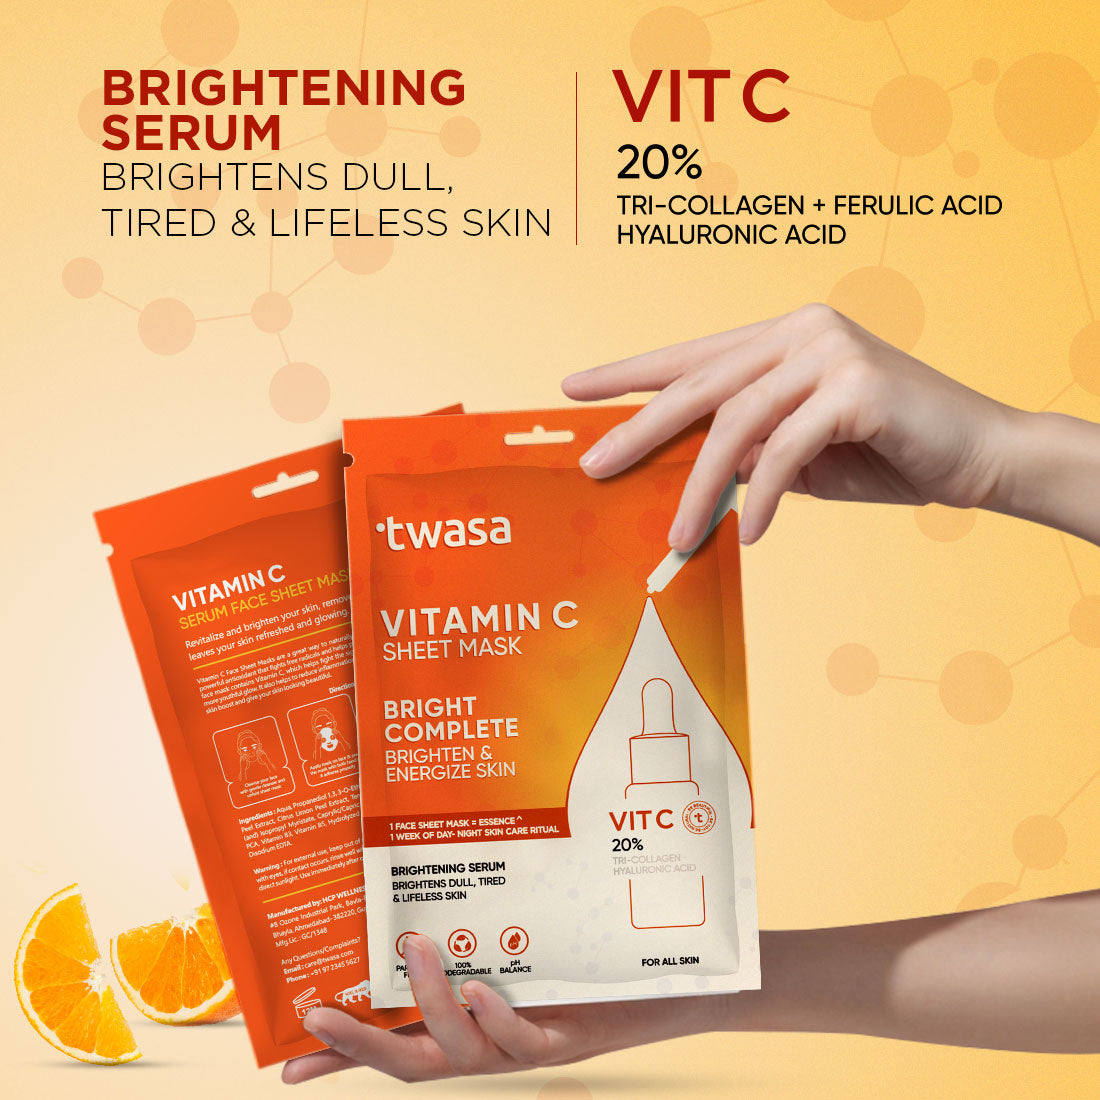 Best vitamin C face mask - Brightening skincare treatment